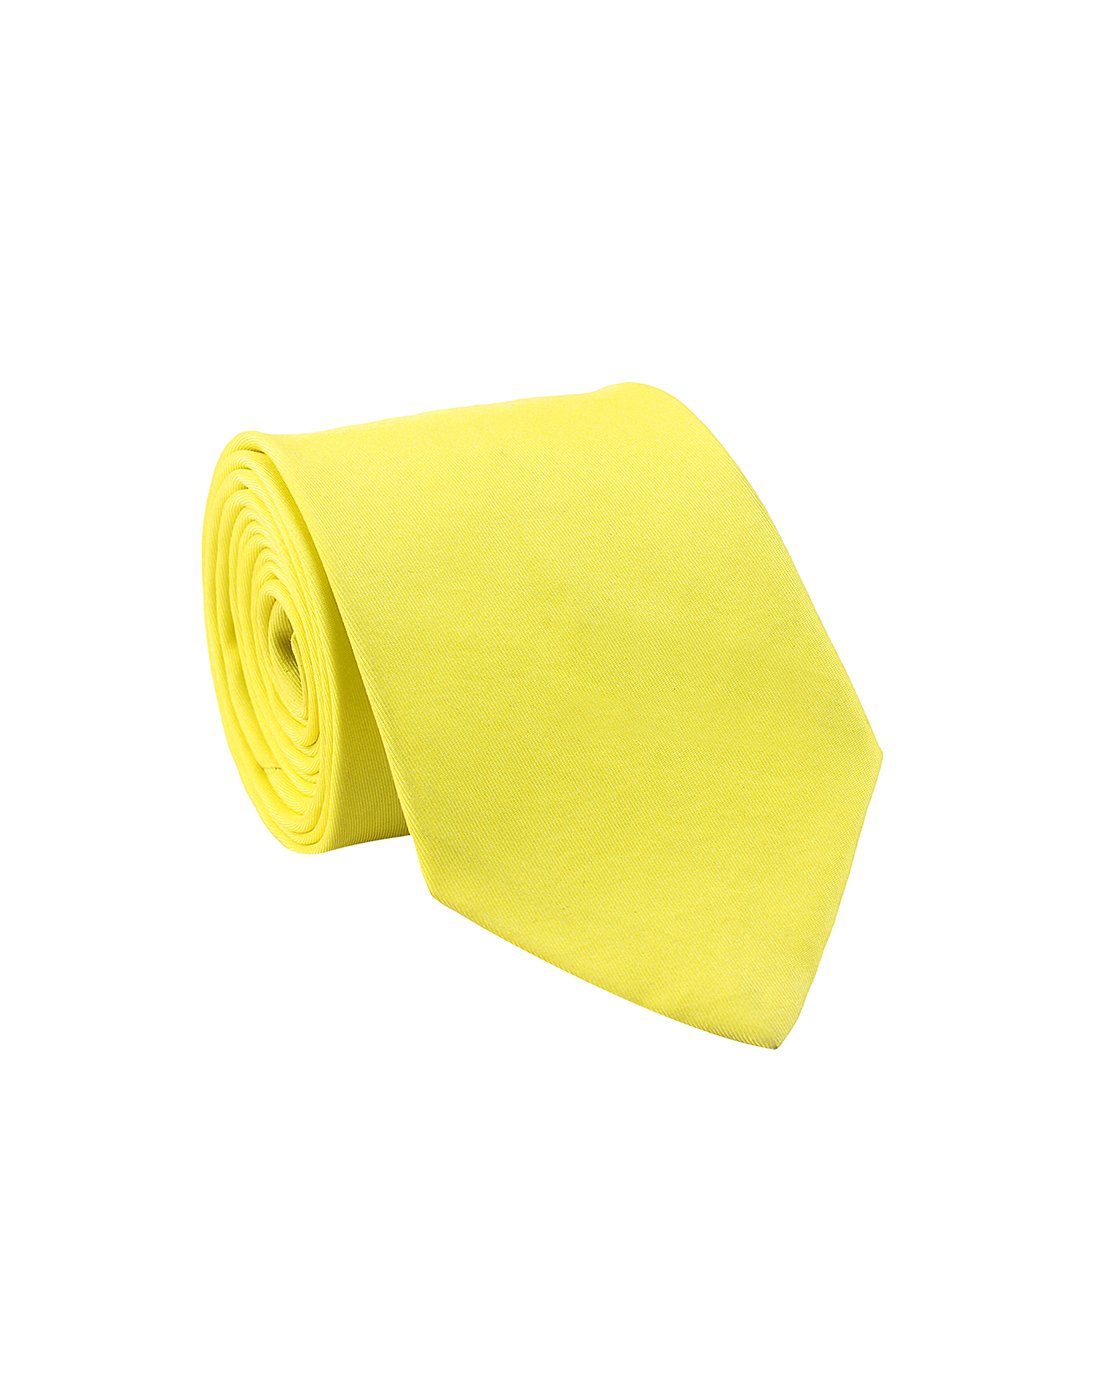 Chokore Lemon Green Twill Silk Tie - Solids line